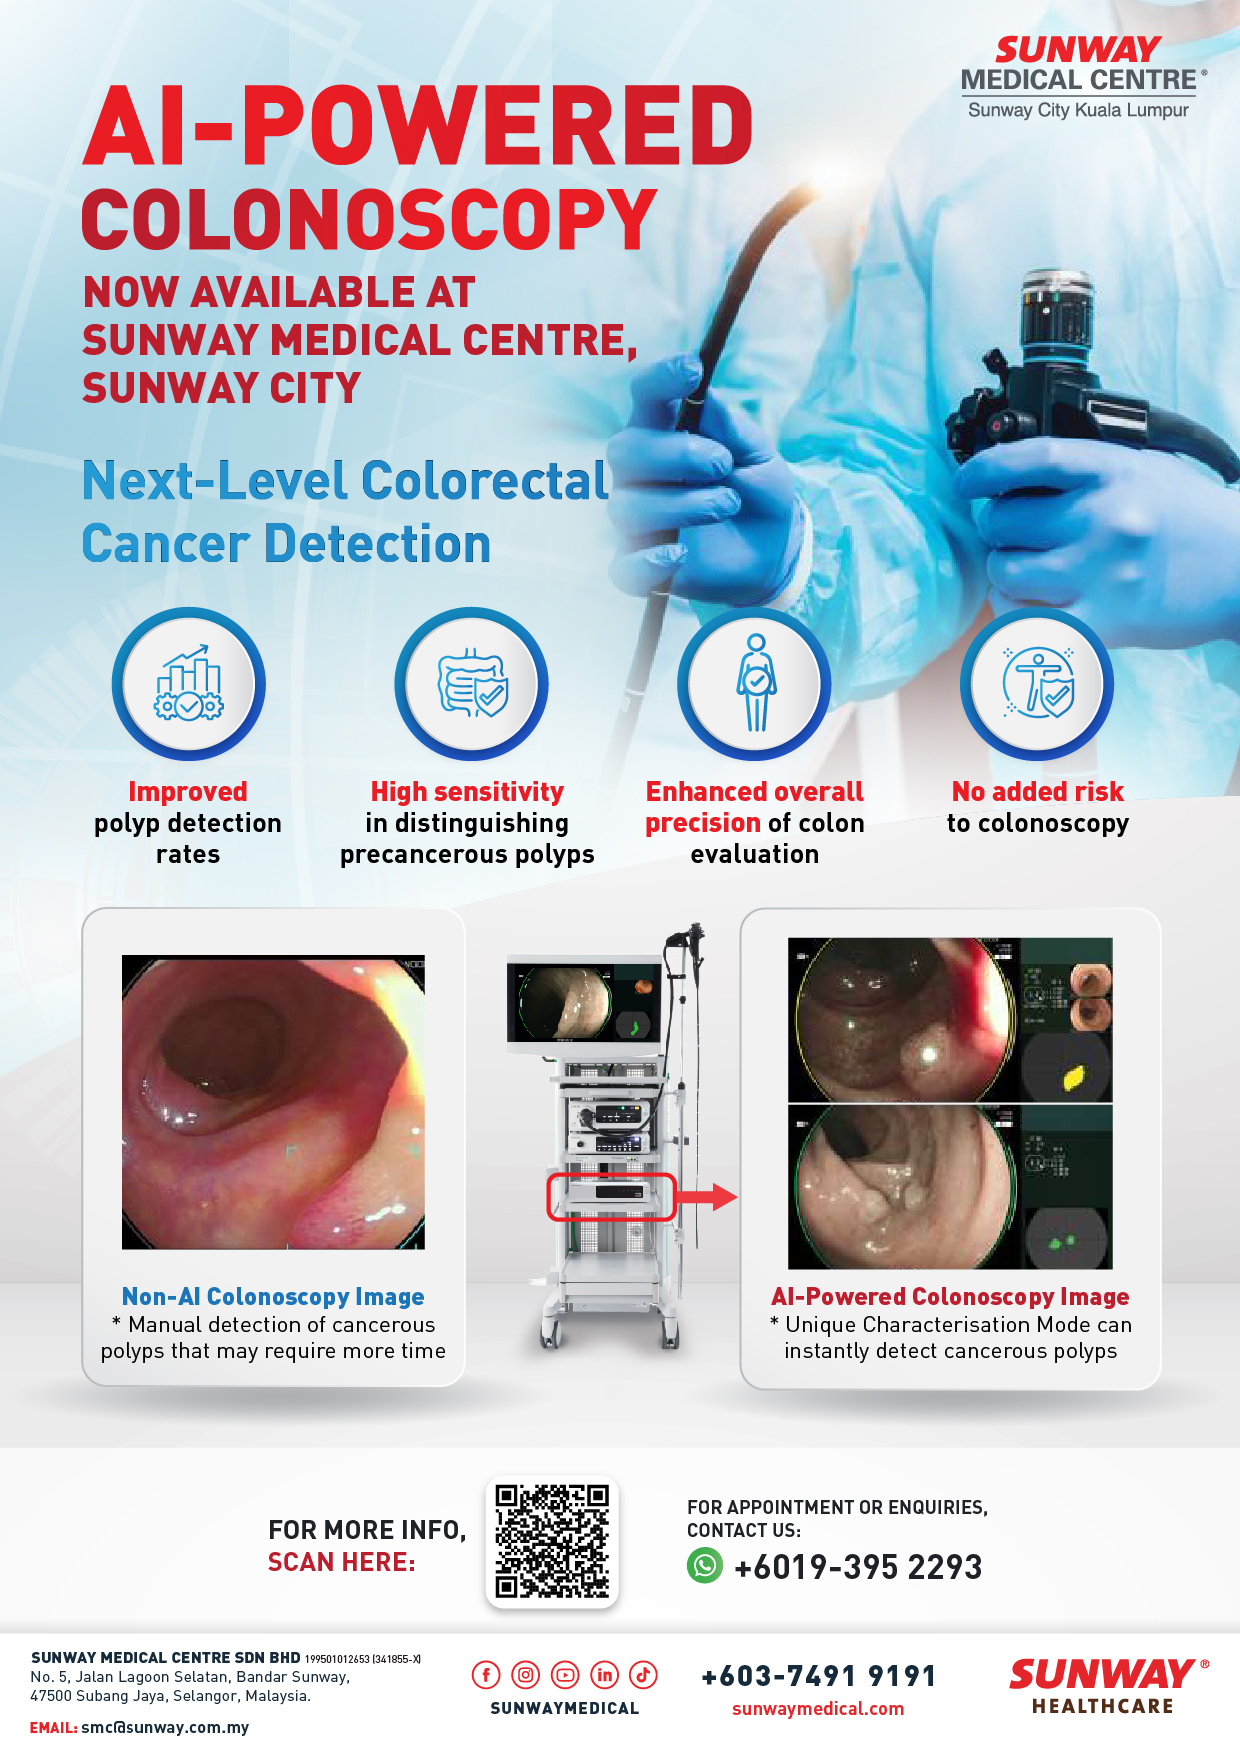 AI-Powered Colonoscopy: Next Level Colorectal Cancer Detection